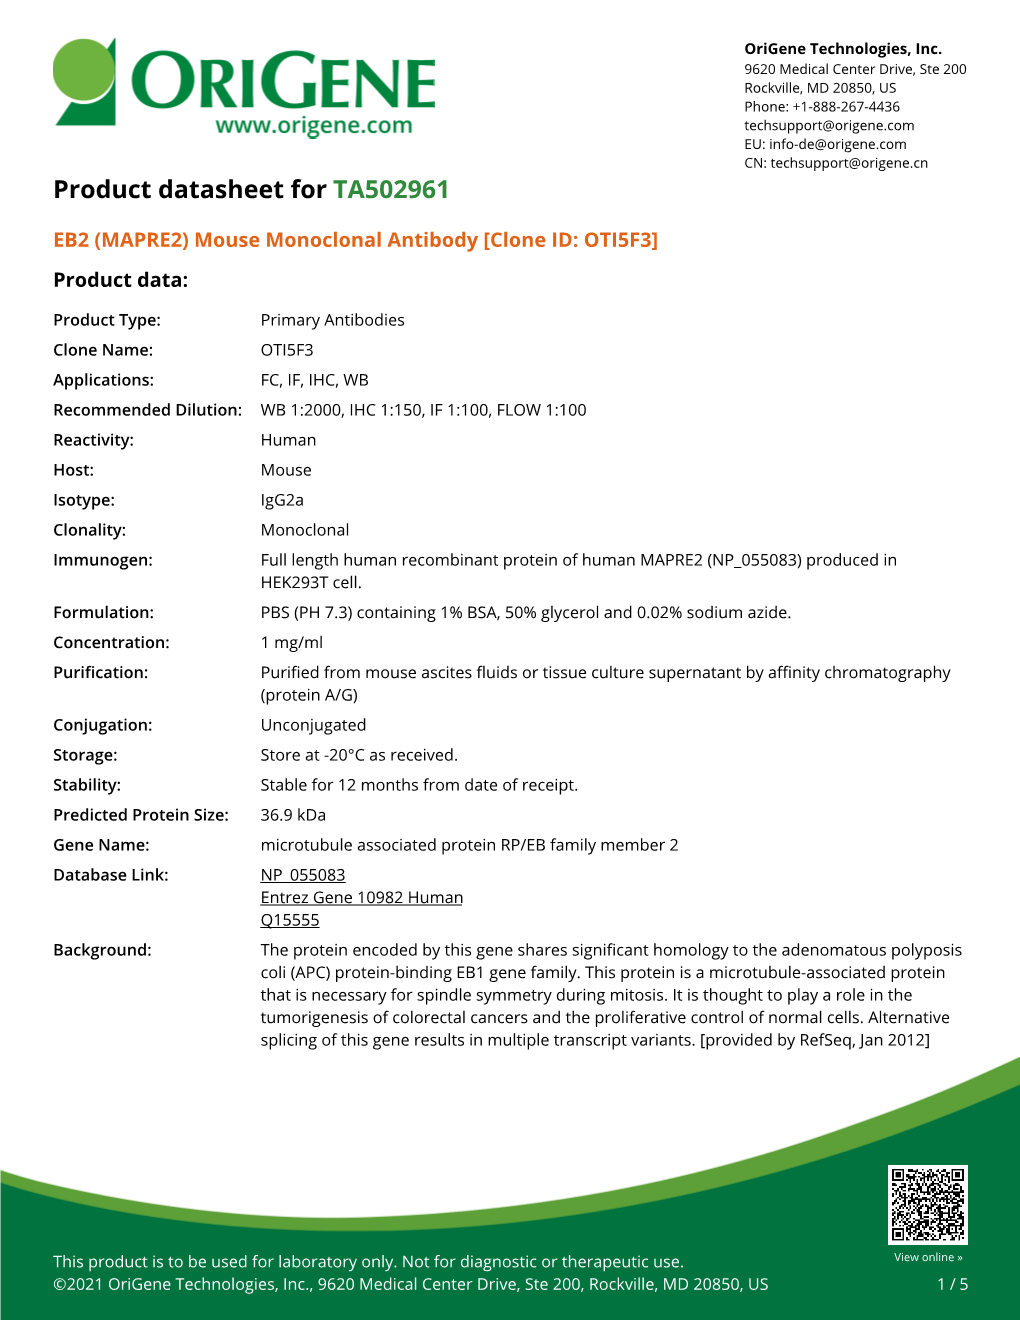 EB2 (MAPRE2) Mouse Monoclonal Antibody [Clone ID: OTI5F3] – TA502961 | Origene